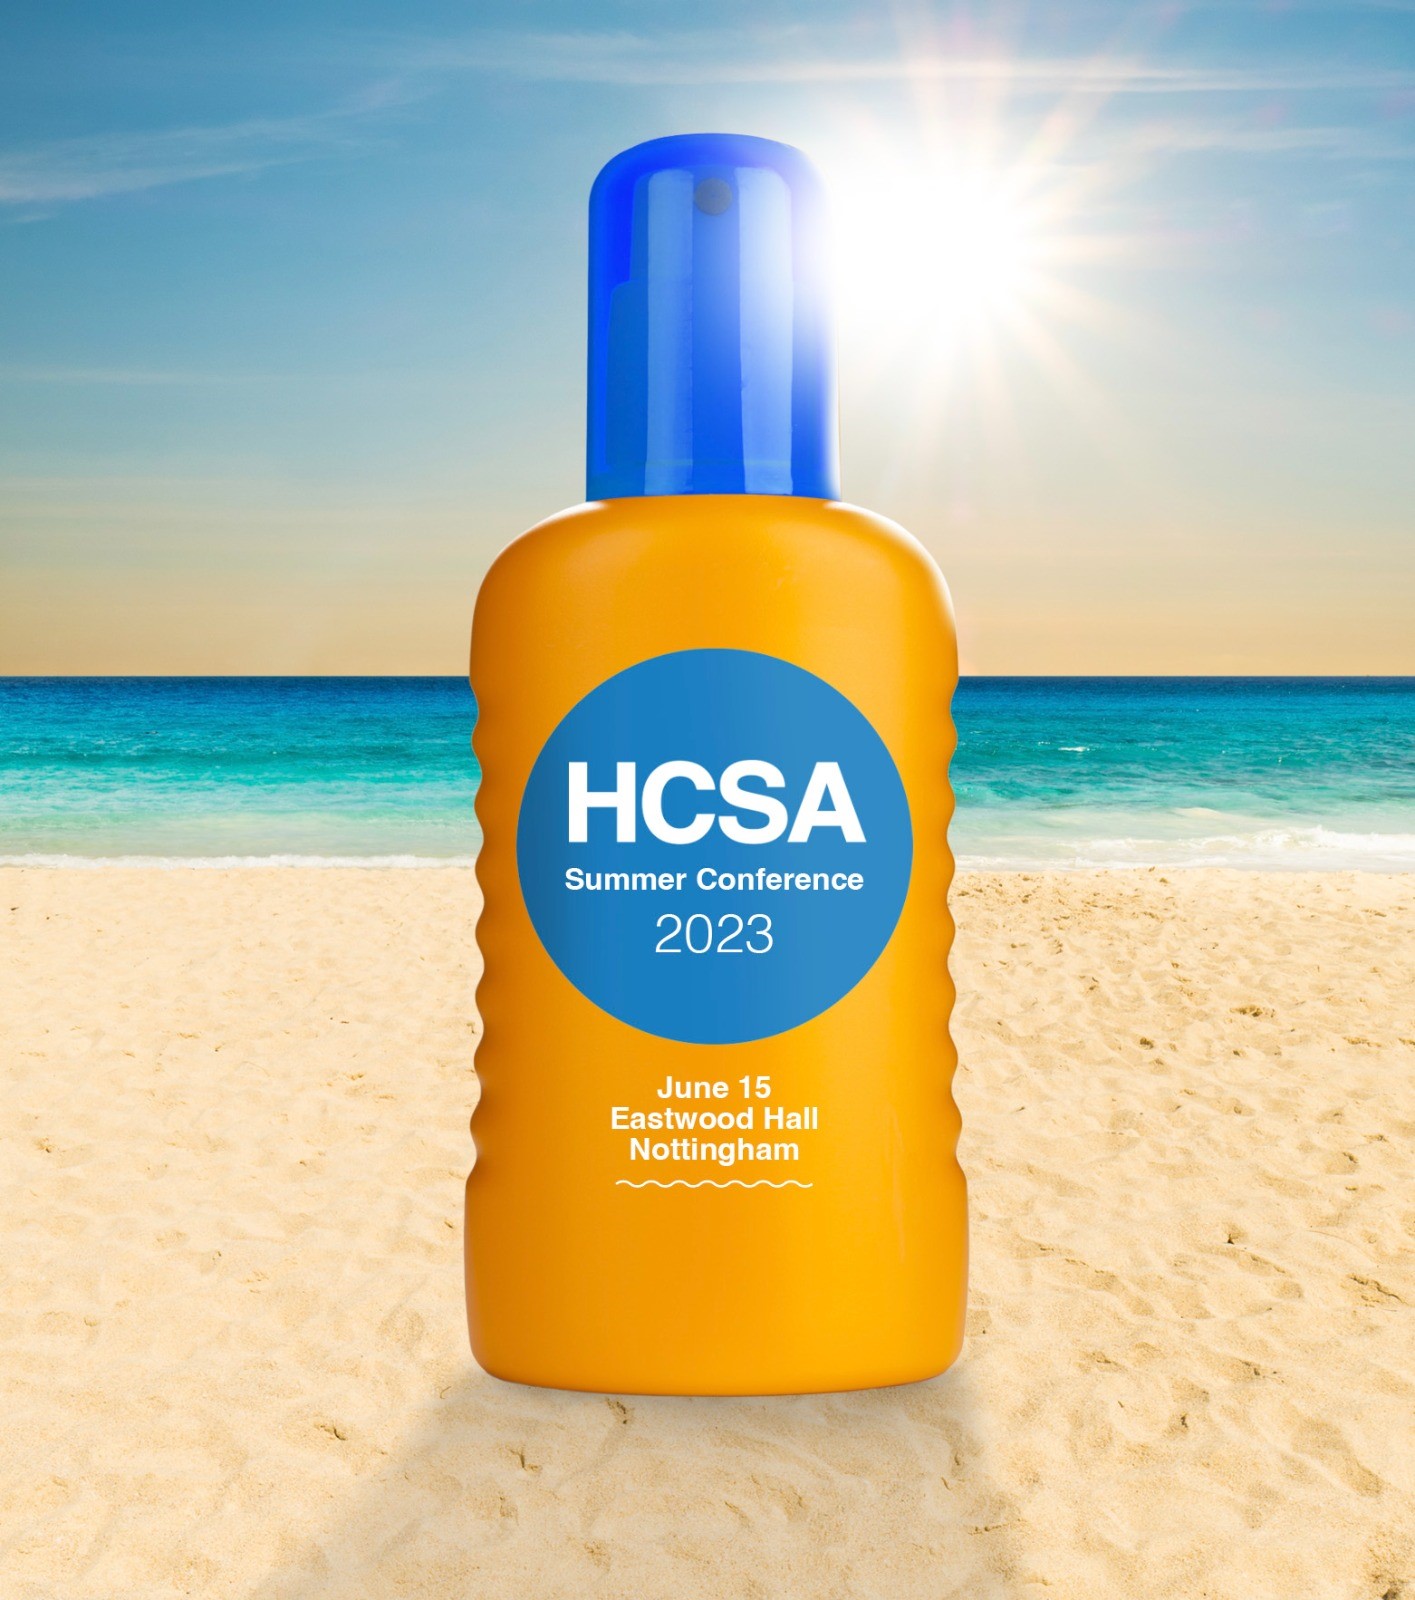 HCSA Summer Conference 2023